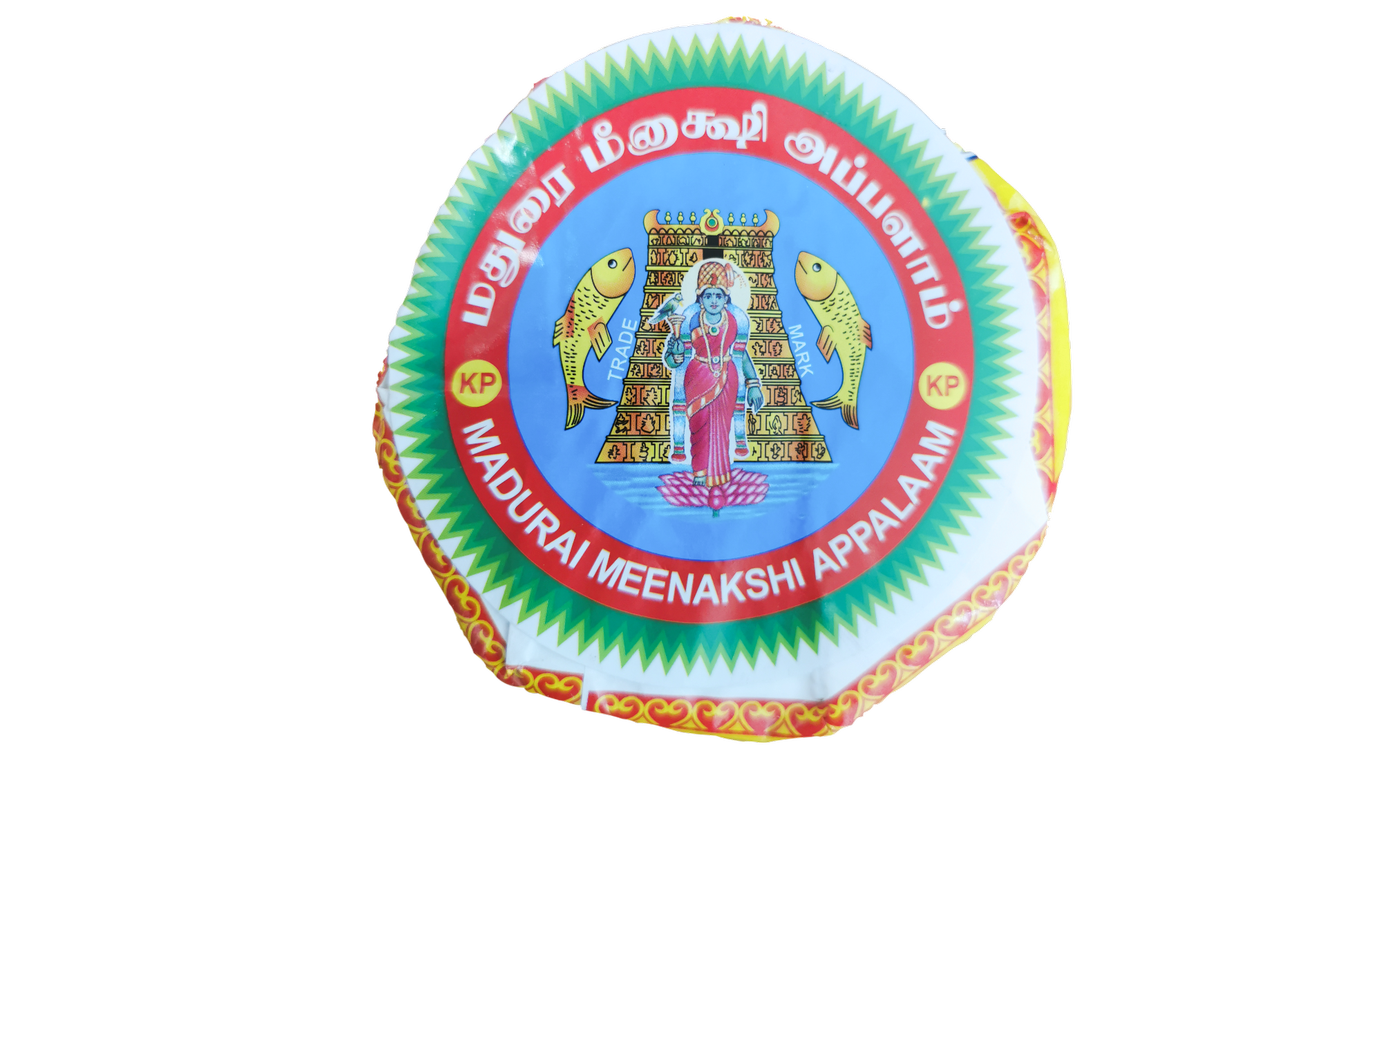 Madurai Meenakshi Appalaam (Pappadum)